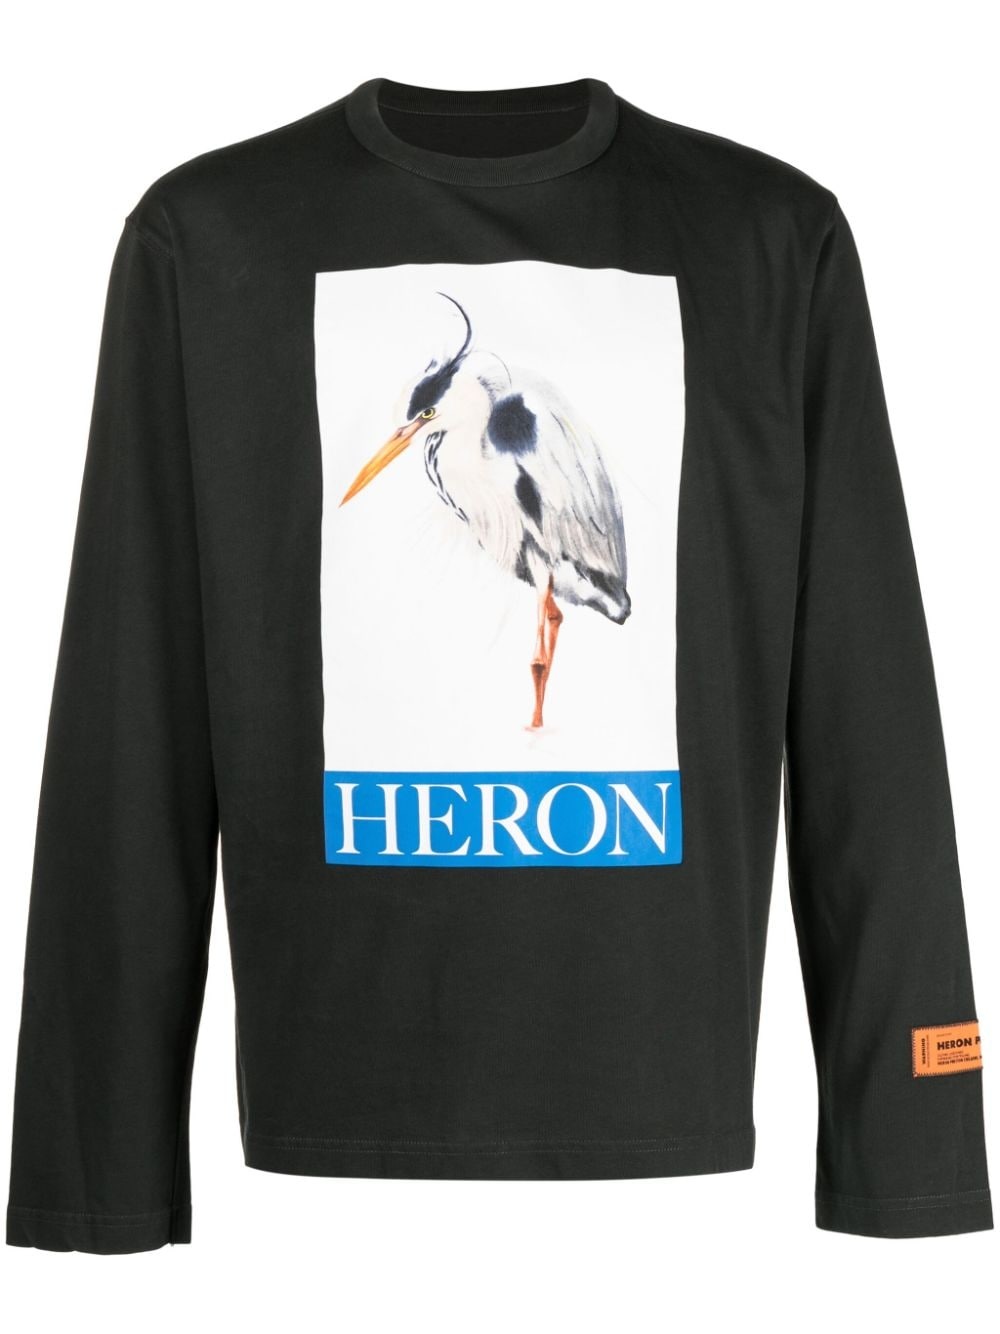 Heron Bird Painted T-shirt - 1